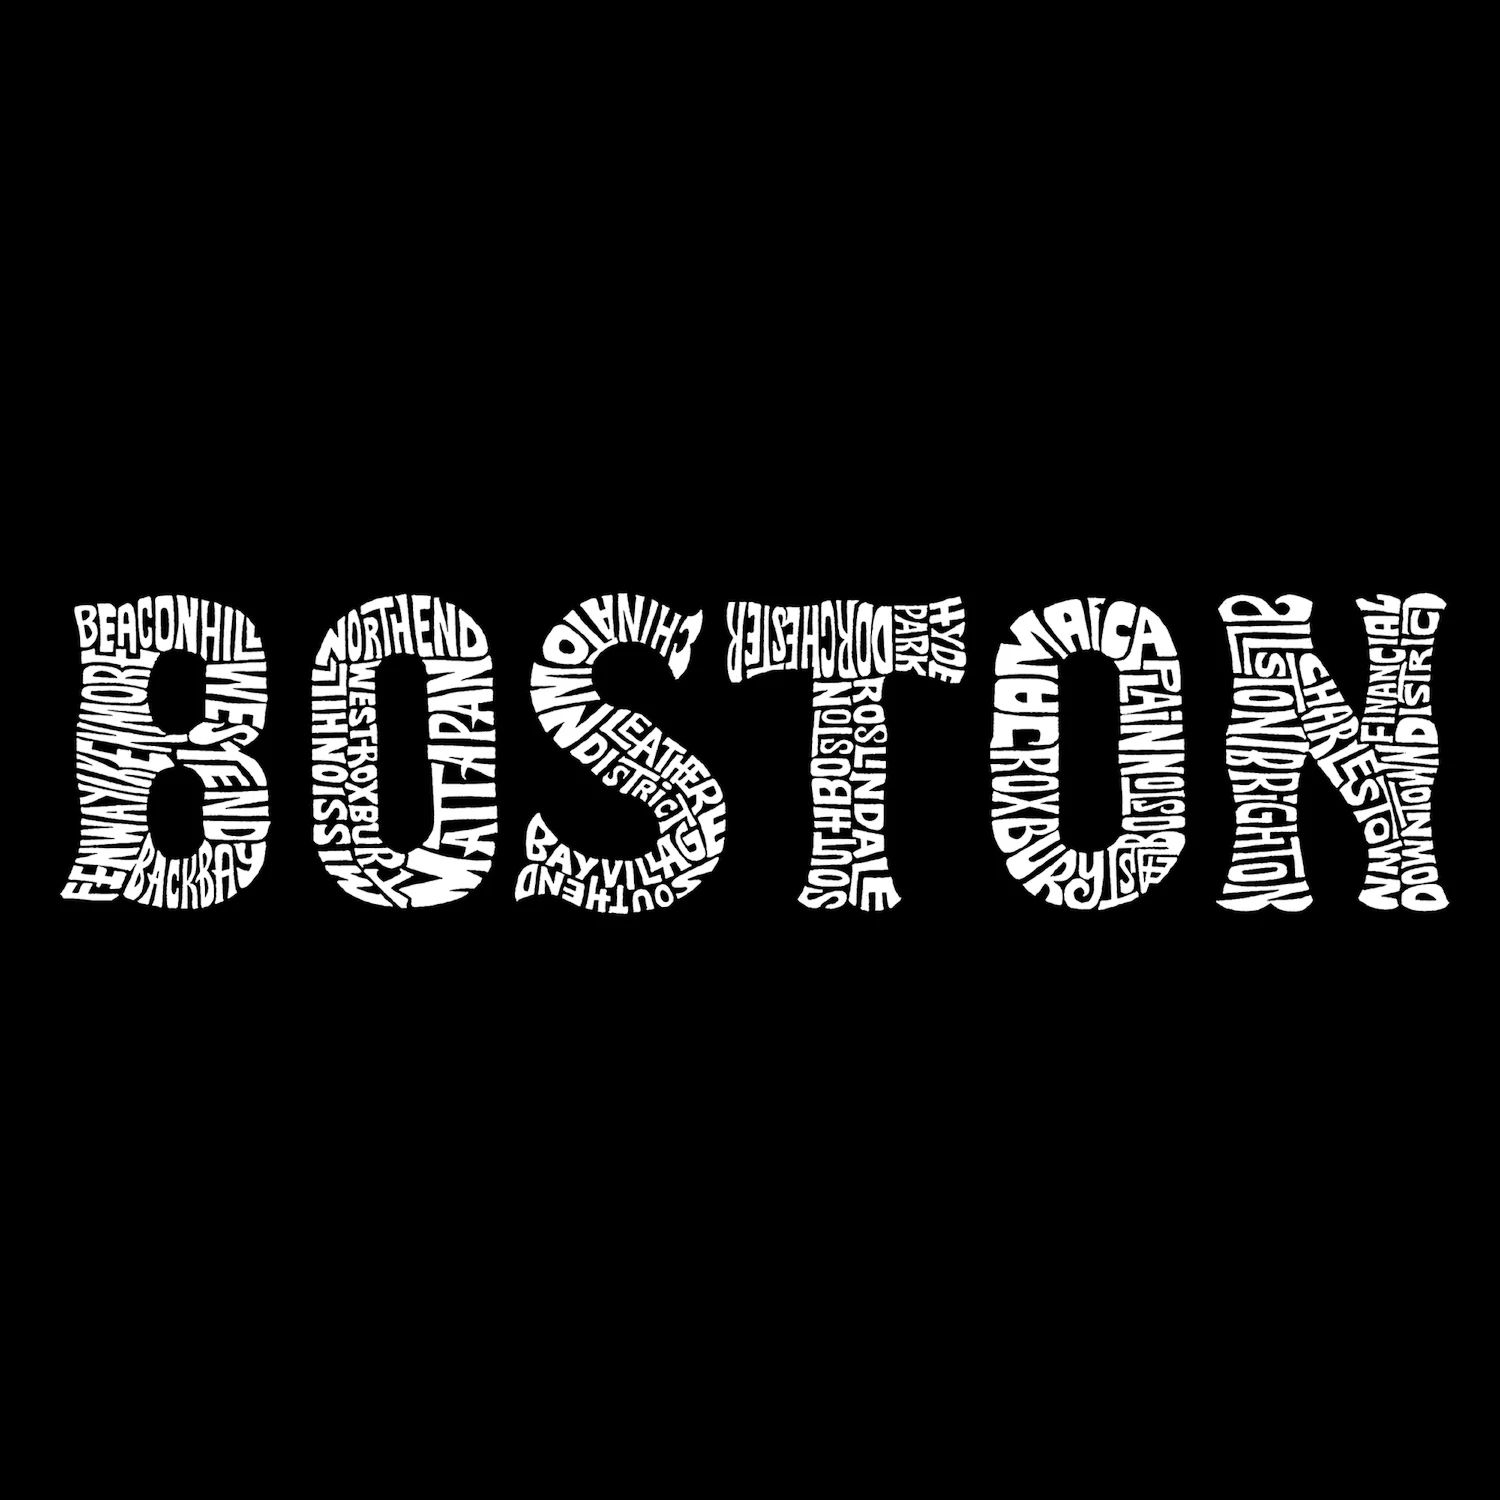 BOSTON NEIGHBORHOODS — мужская футболка с длинным рукавом с надписью Word Art LA Pop Art brooklyn neighborhoods мужская футболка с длинным рукавом с надписью word art la pop art